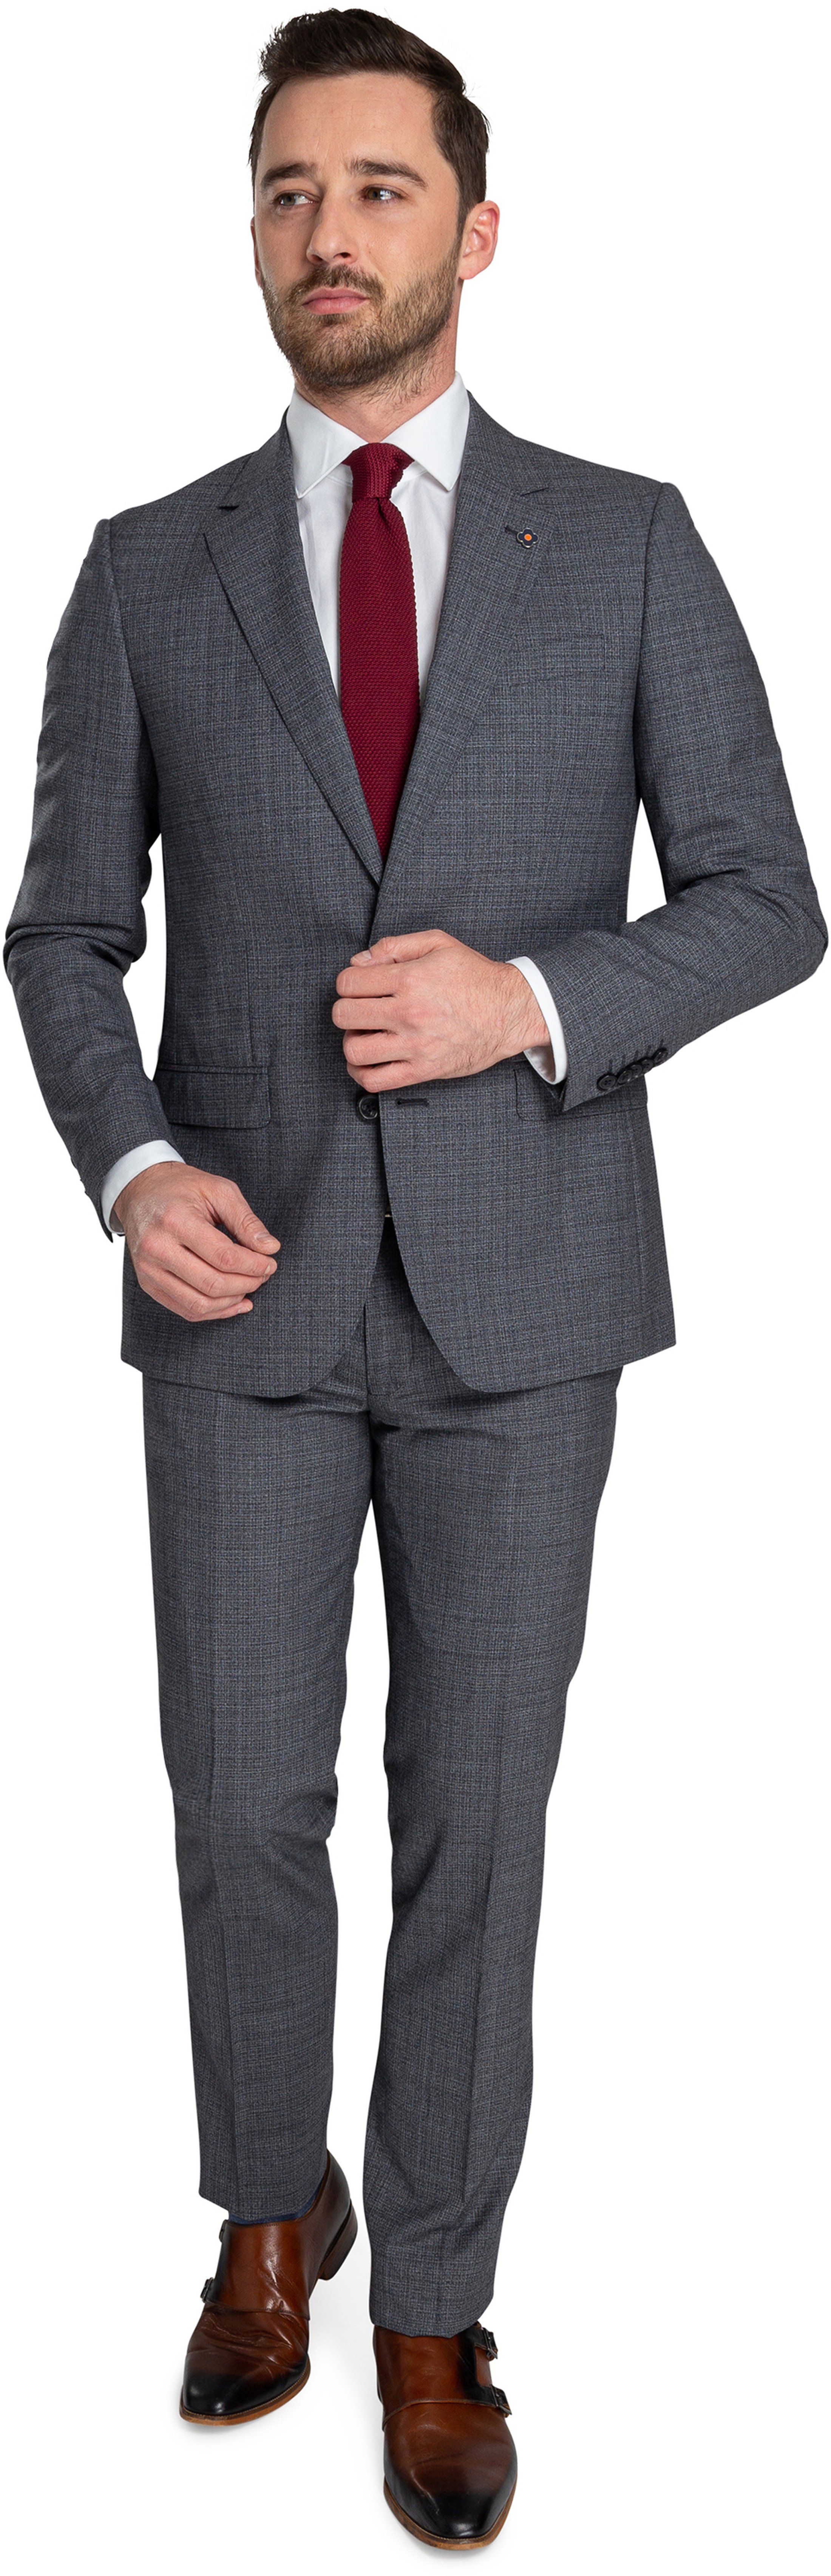 Suitable Prestige Suit Faux Checks Dark Grey Grey size 42-R